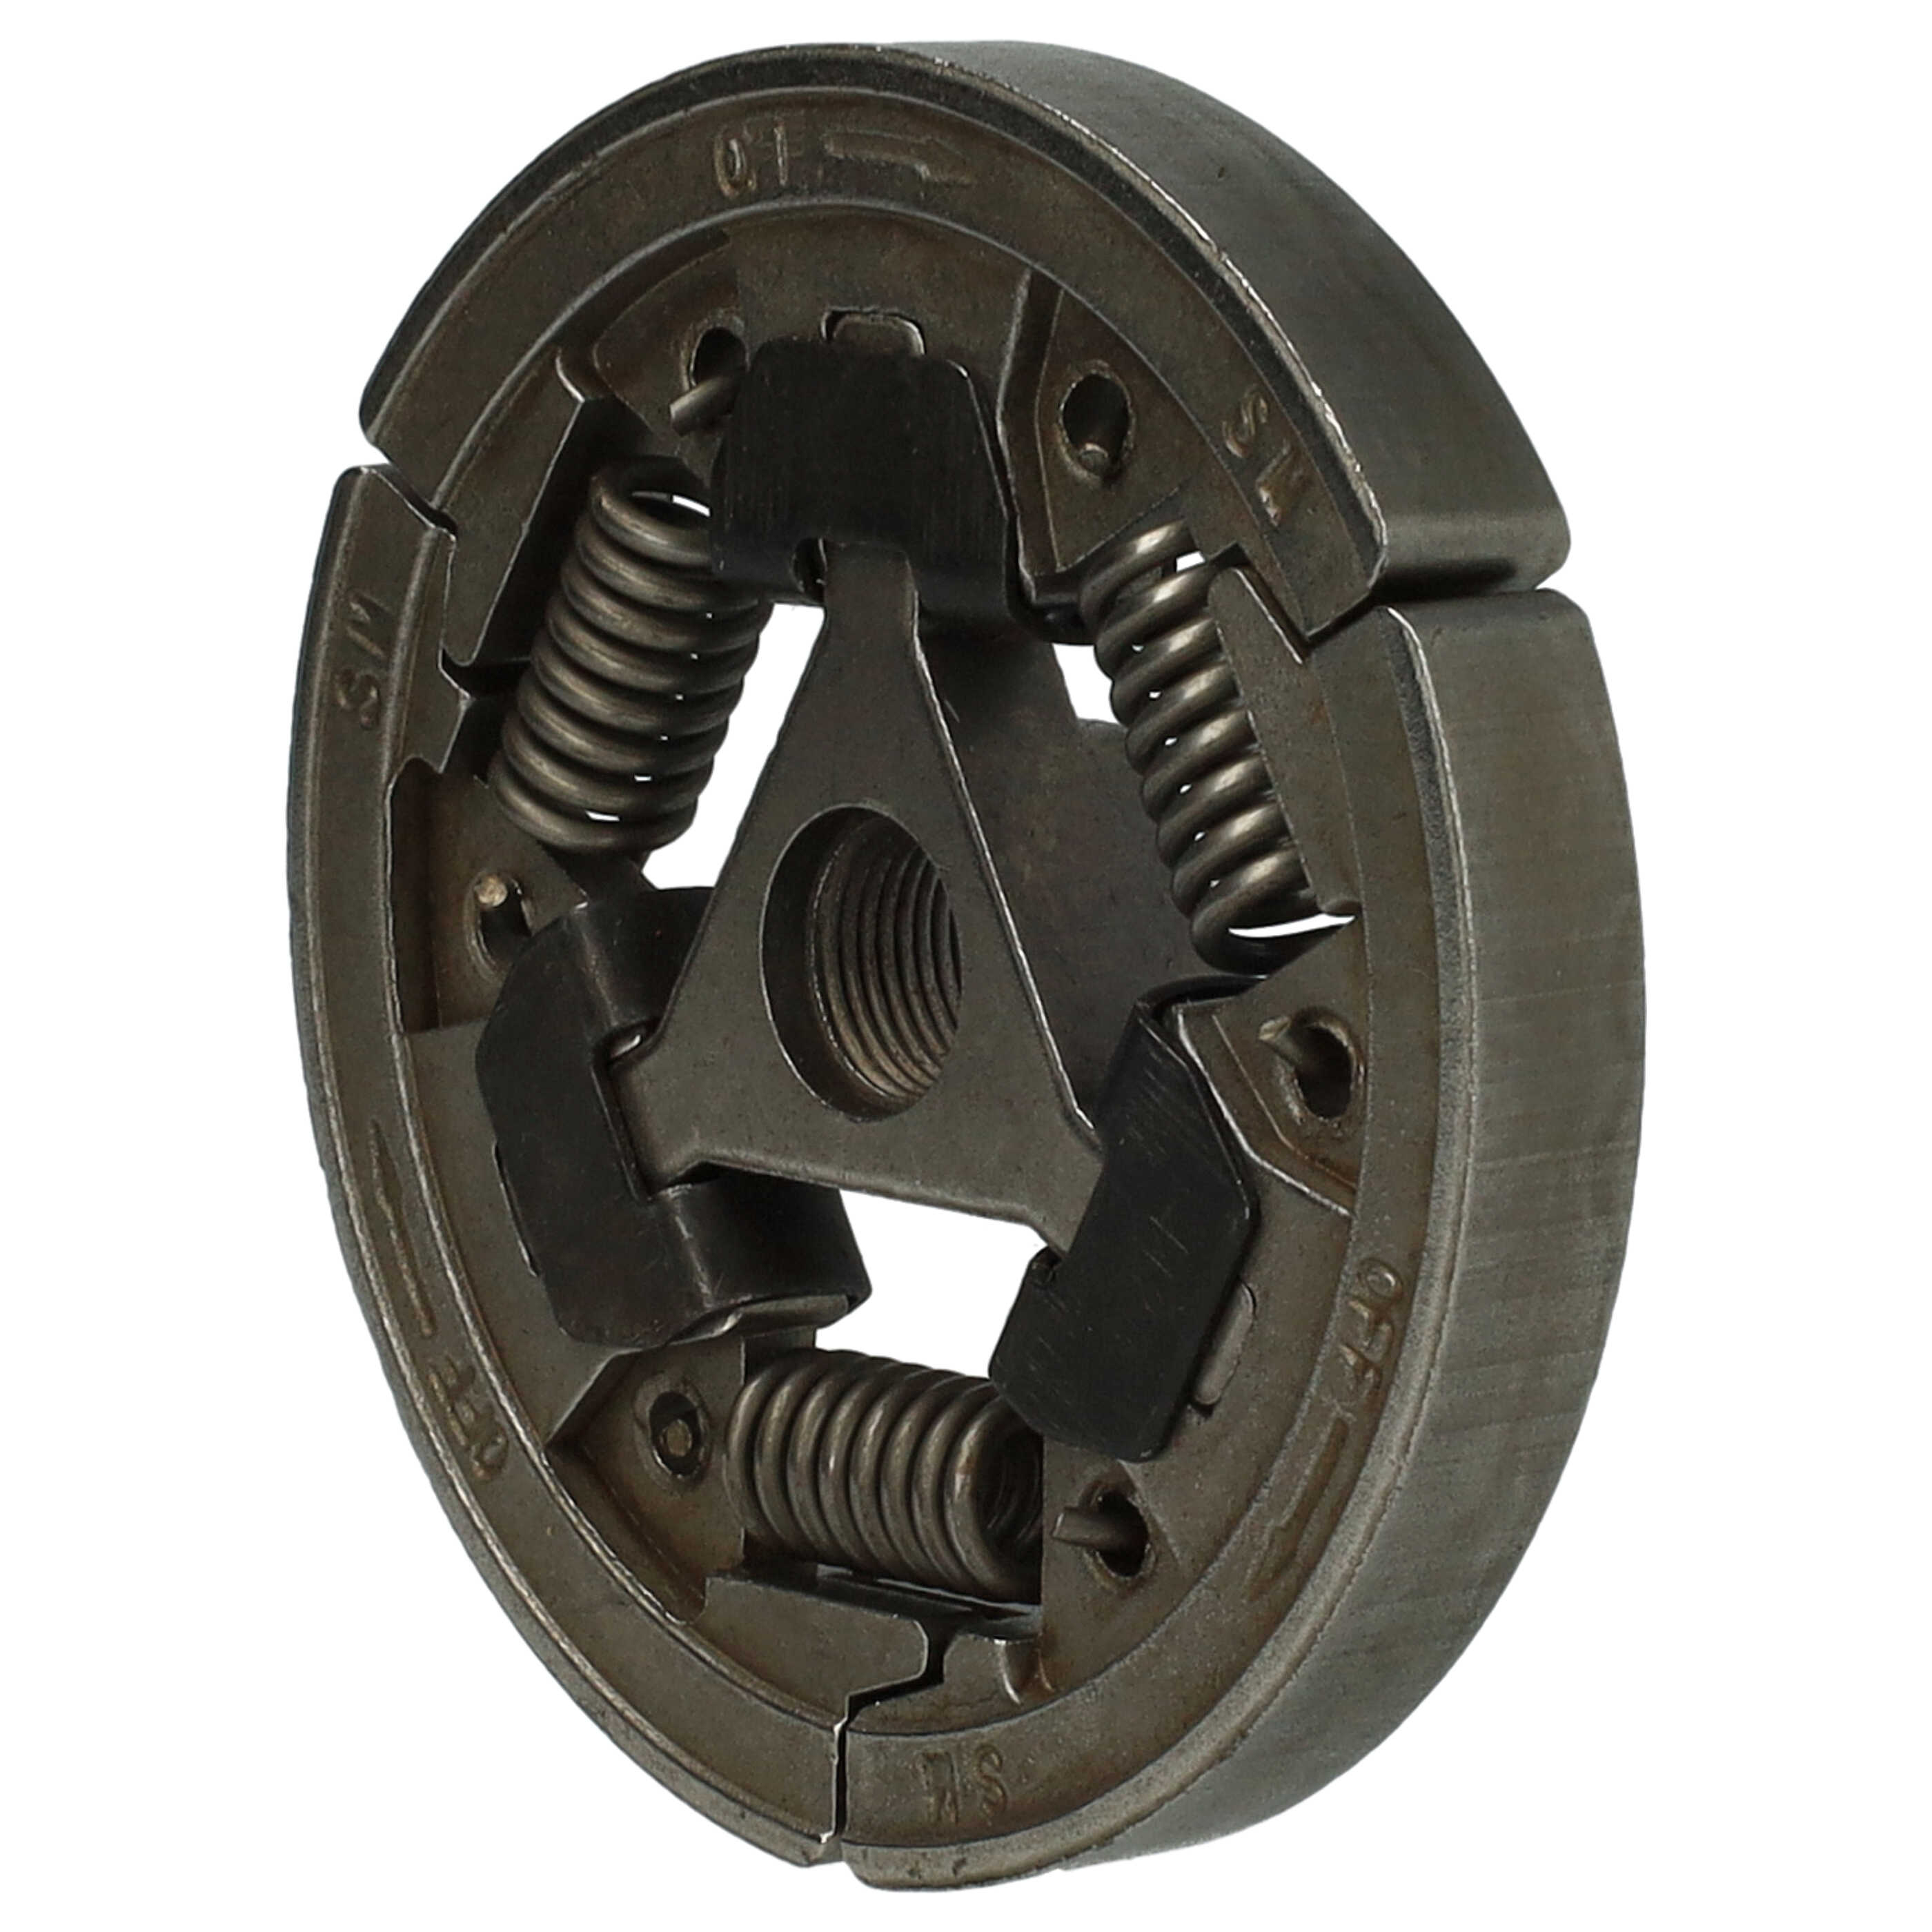 Embrague centrífugo compatible con Stihl TS420 sierras de cadena, etc. - hierro / acero 65Mn, 7,4 cm de diámet